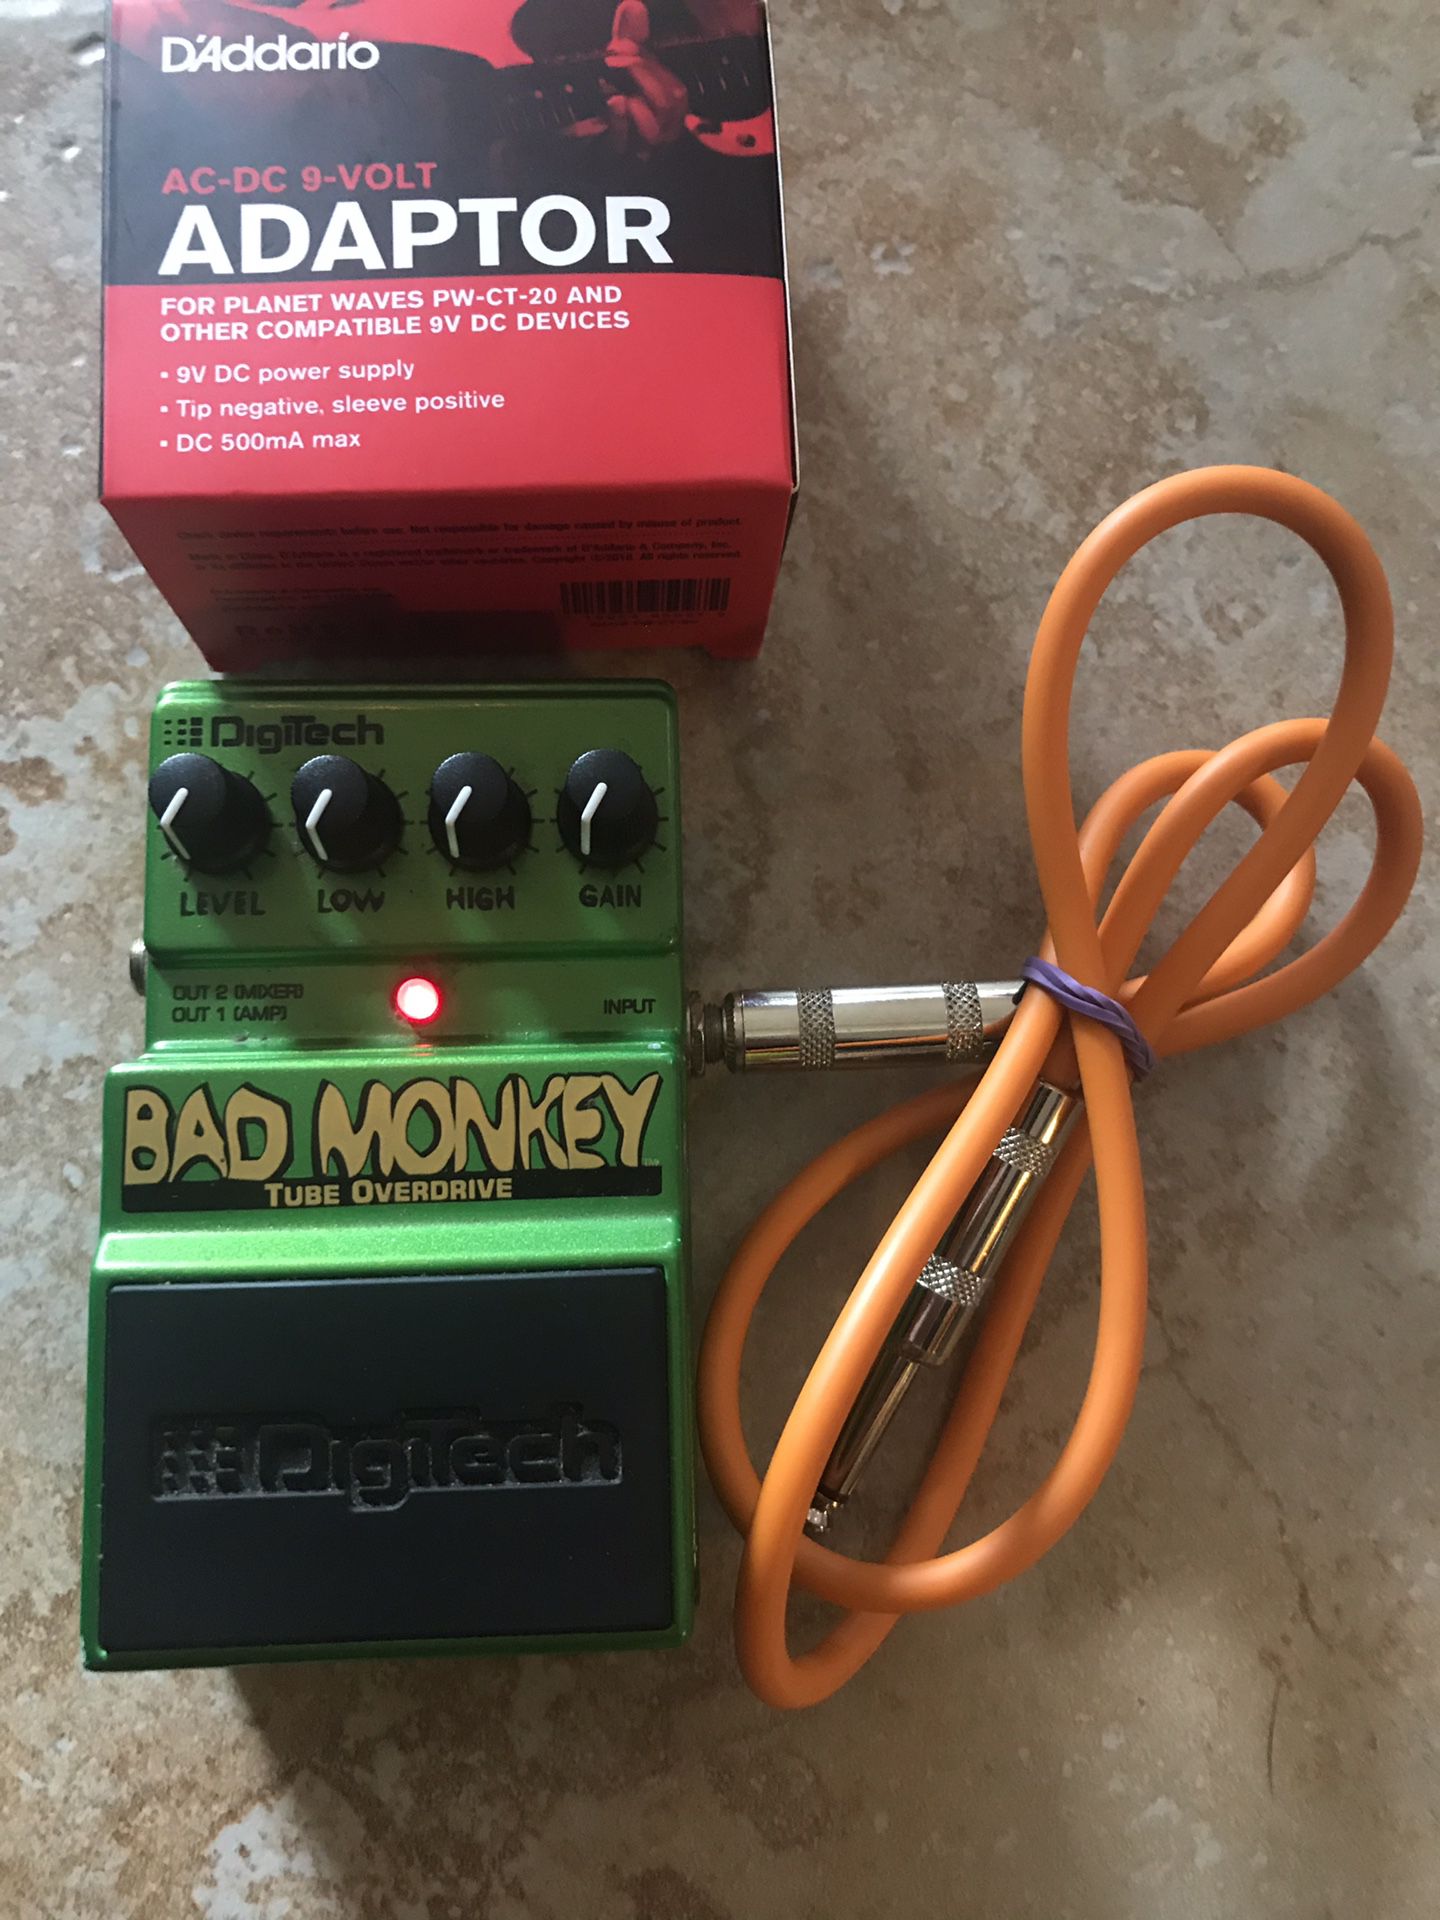 Bad monkey guitar pedal